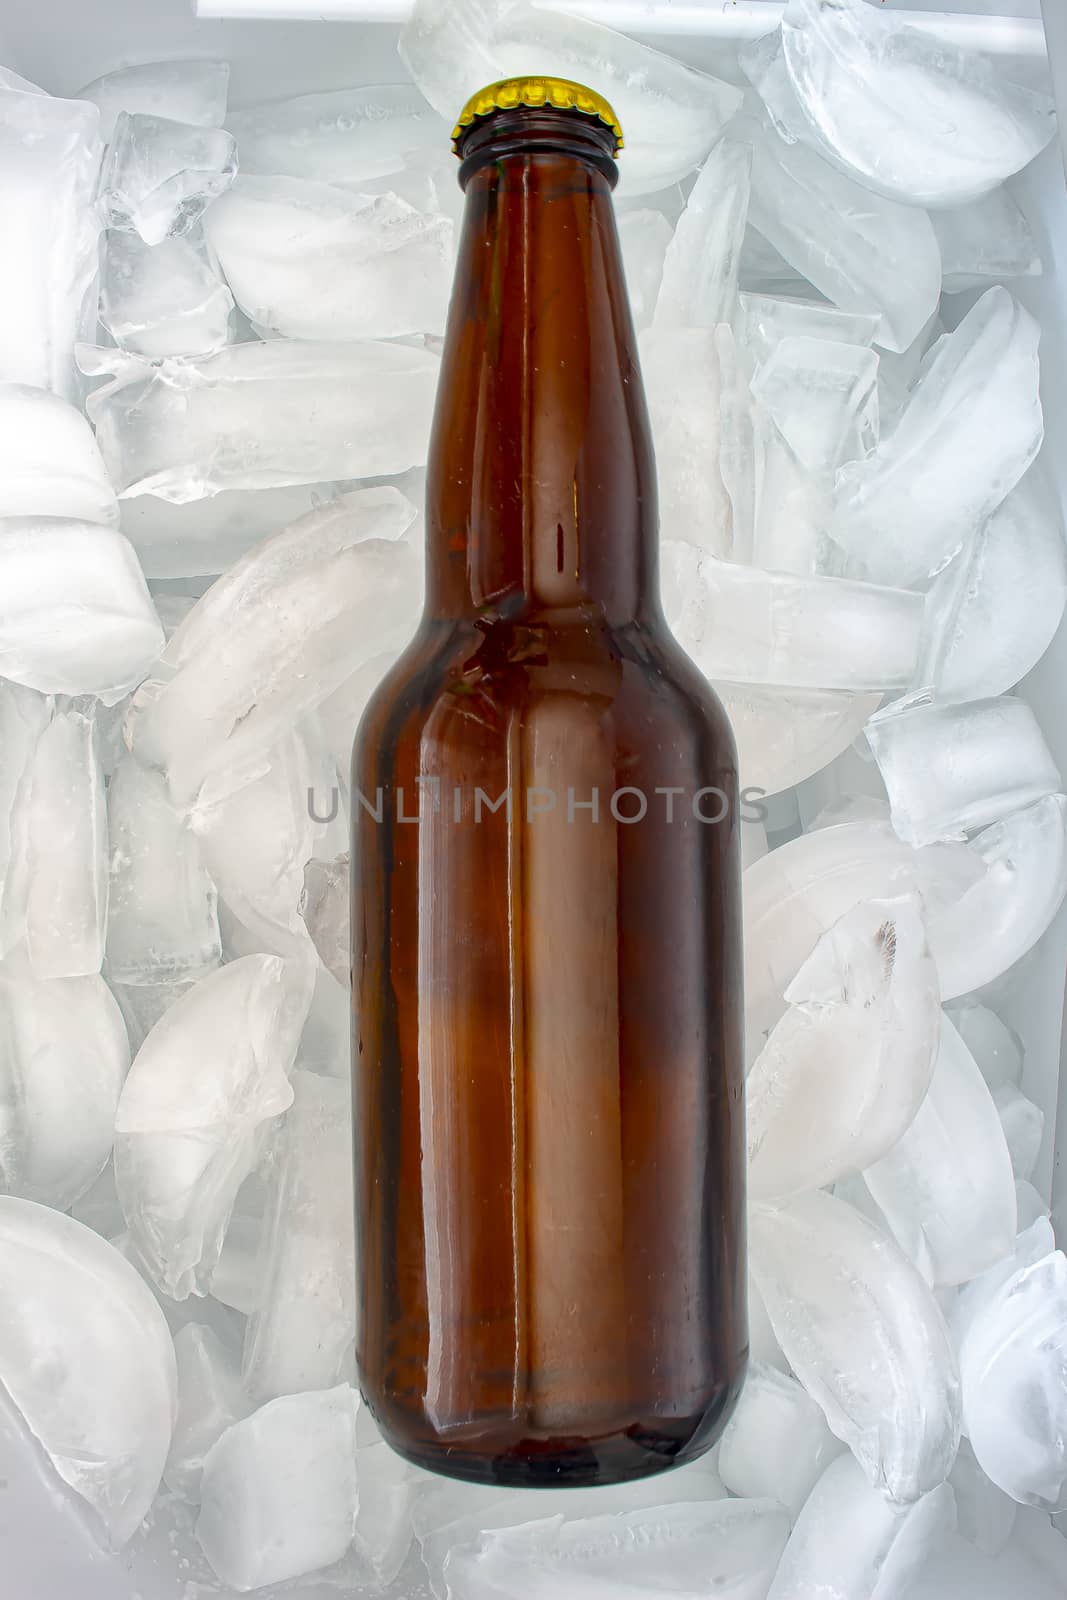 A generic brown beer bottle on ice by oasisamuel